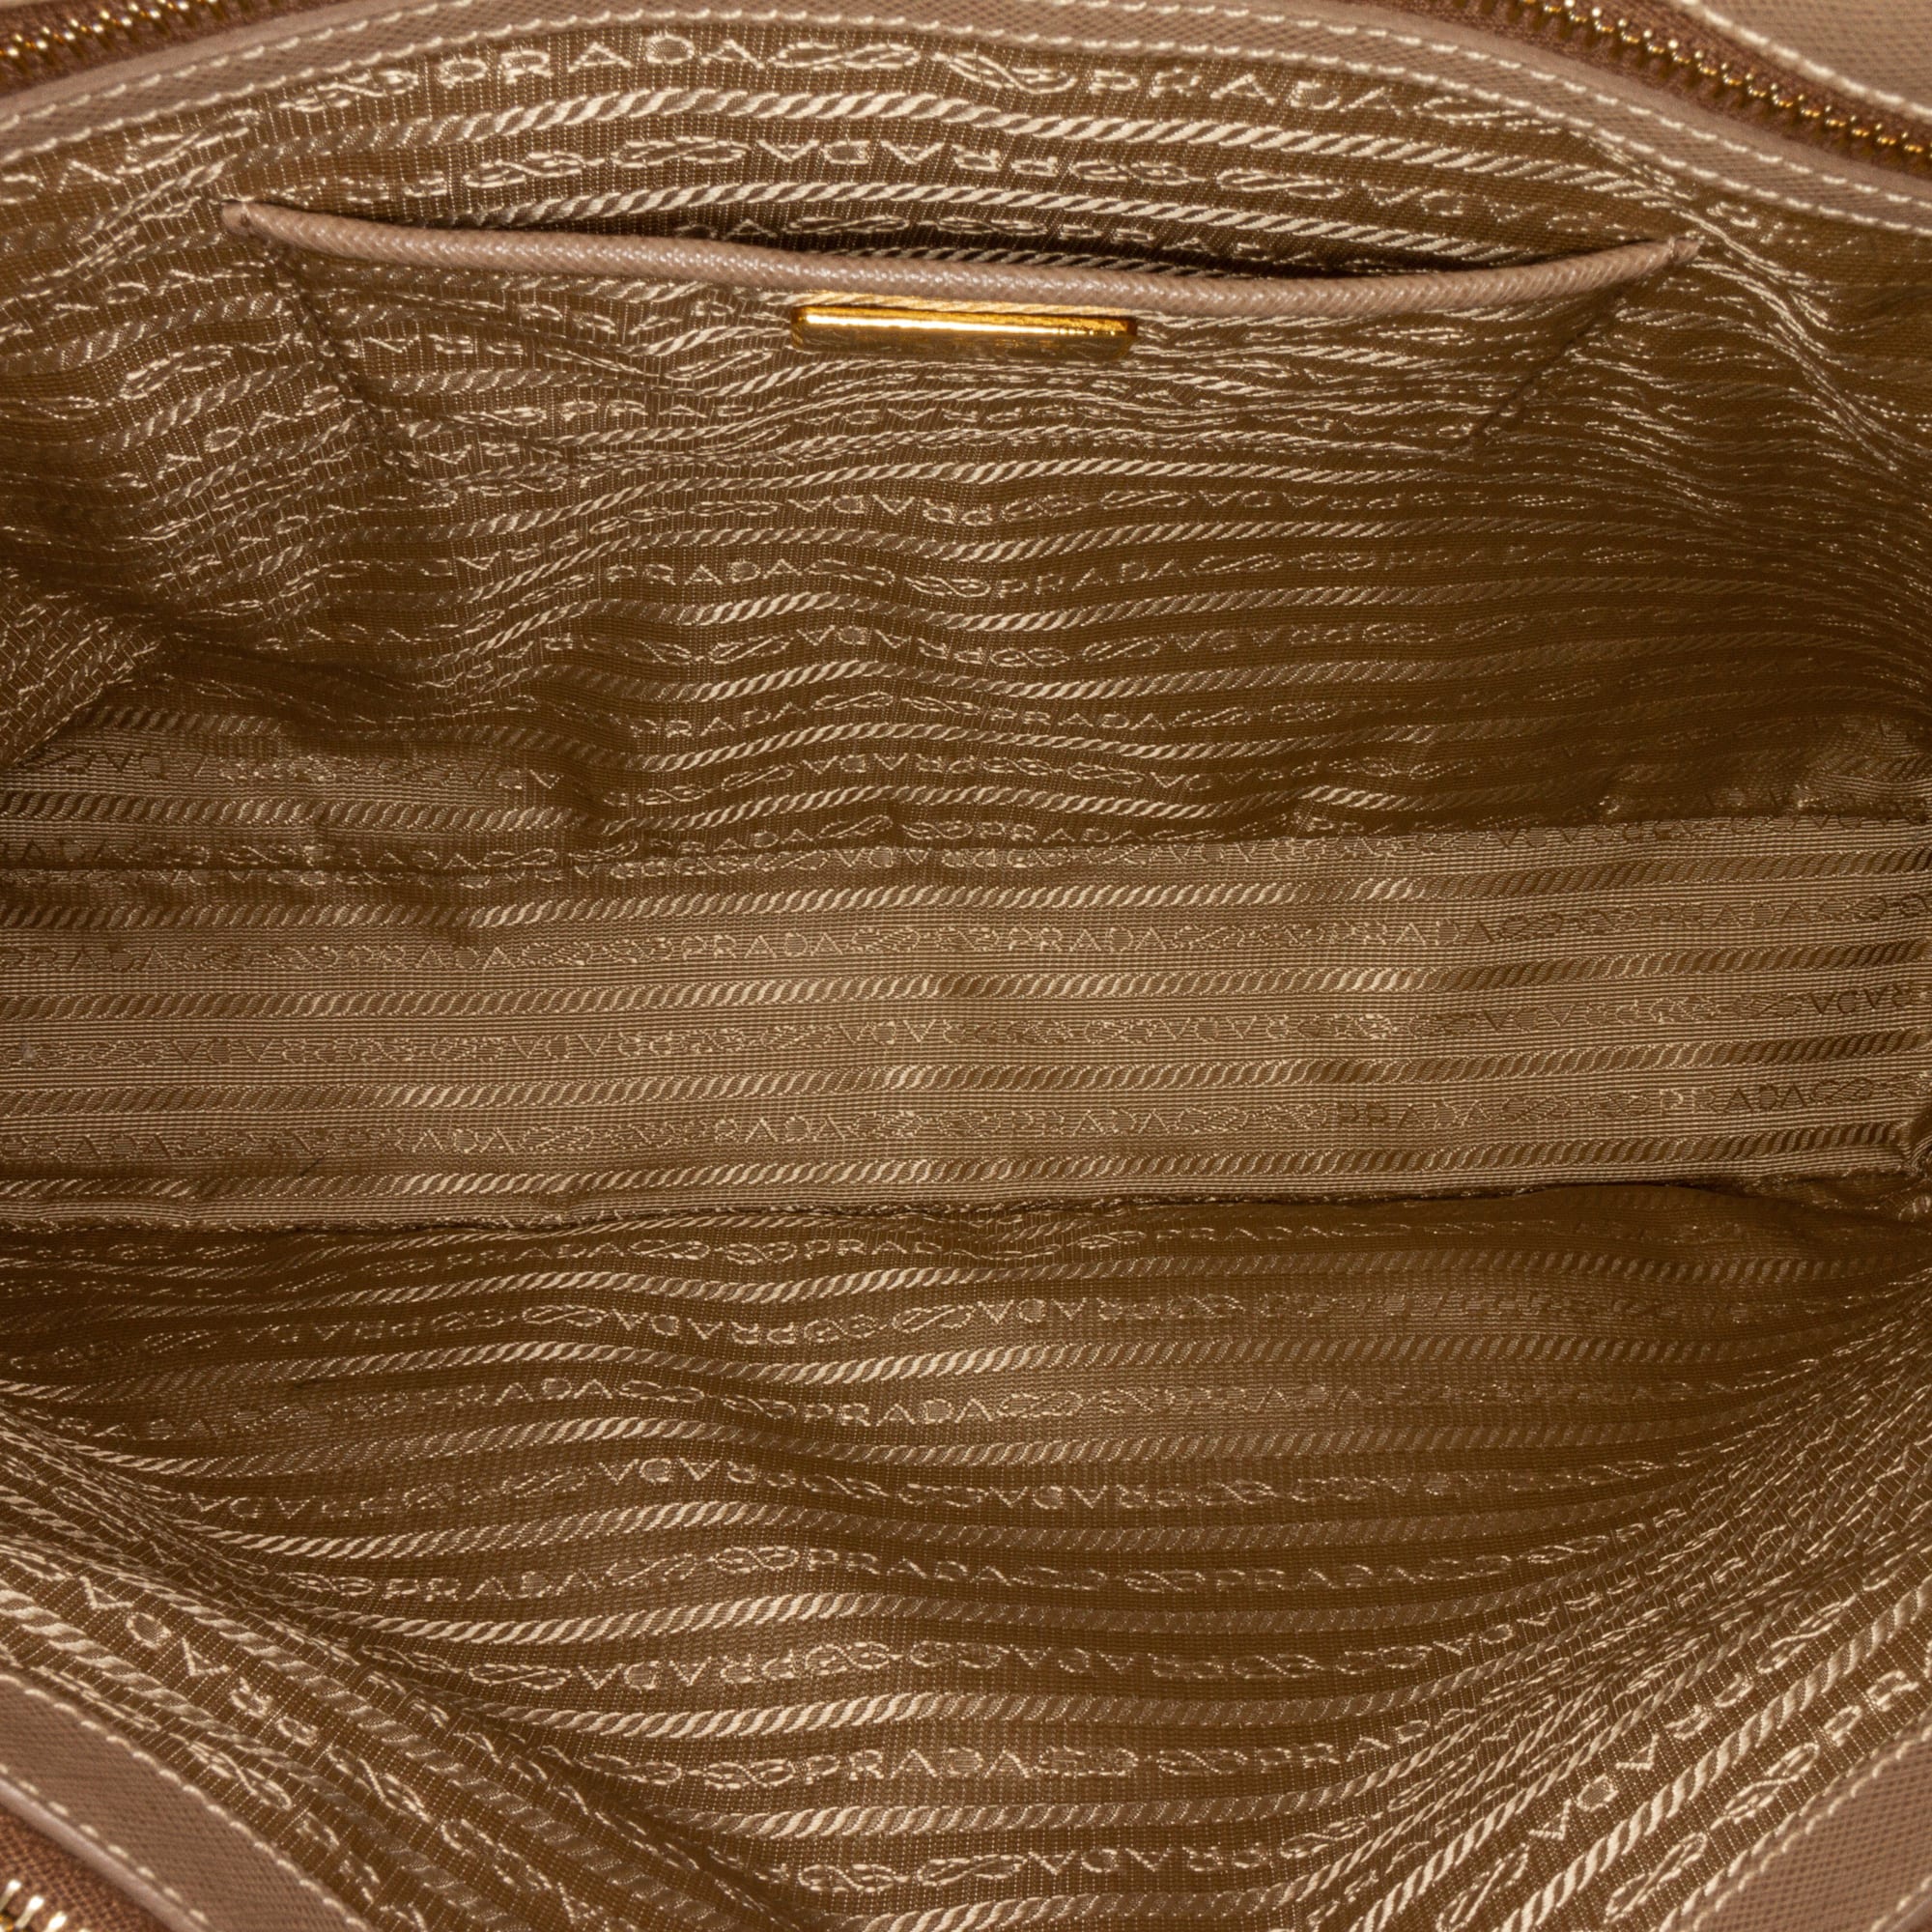 Prada Saffiano Lux Promenade Handbag, ONESIZE